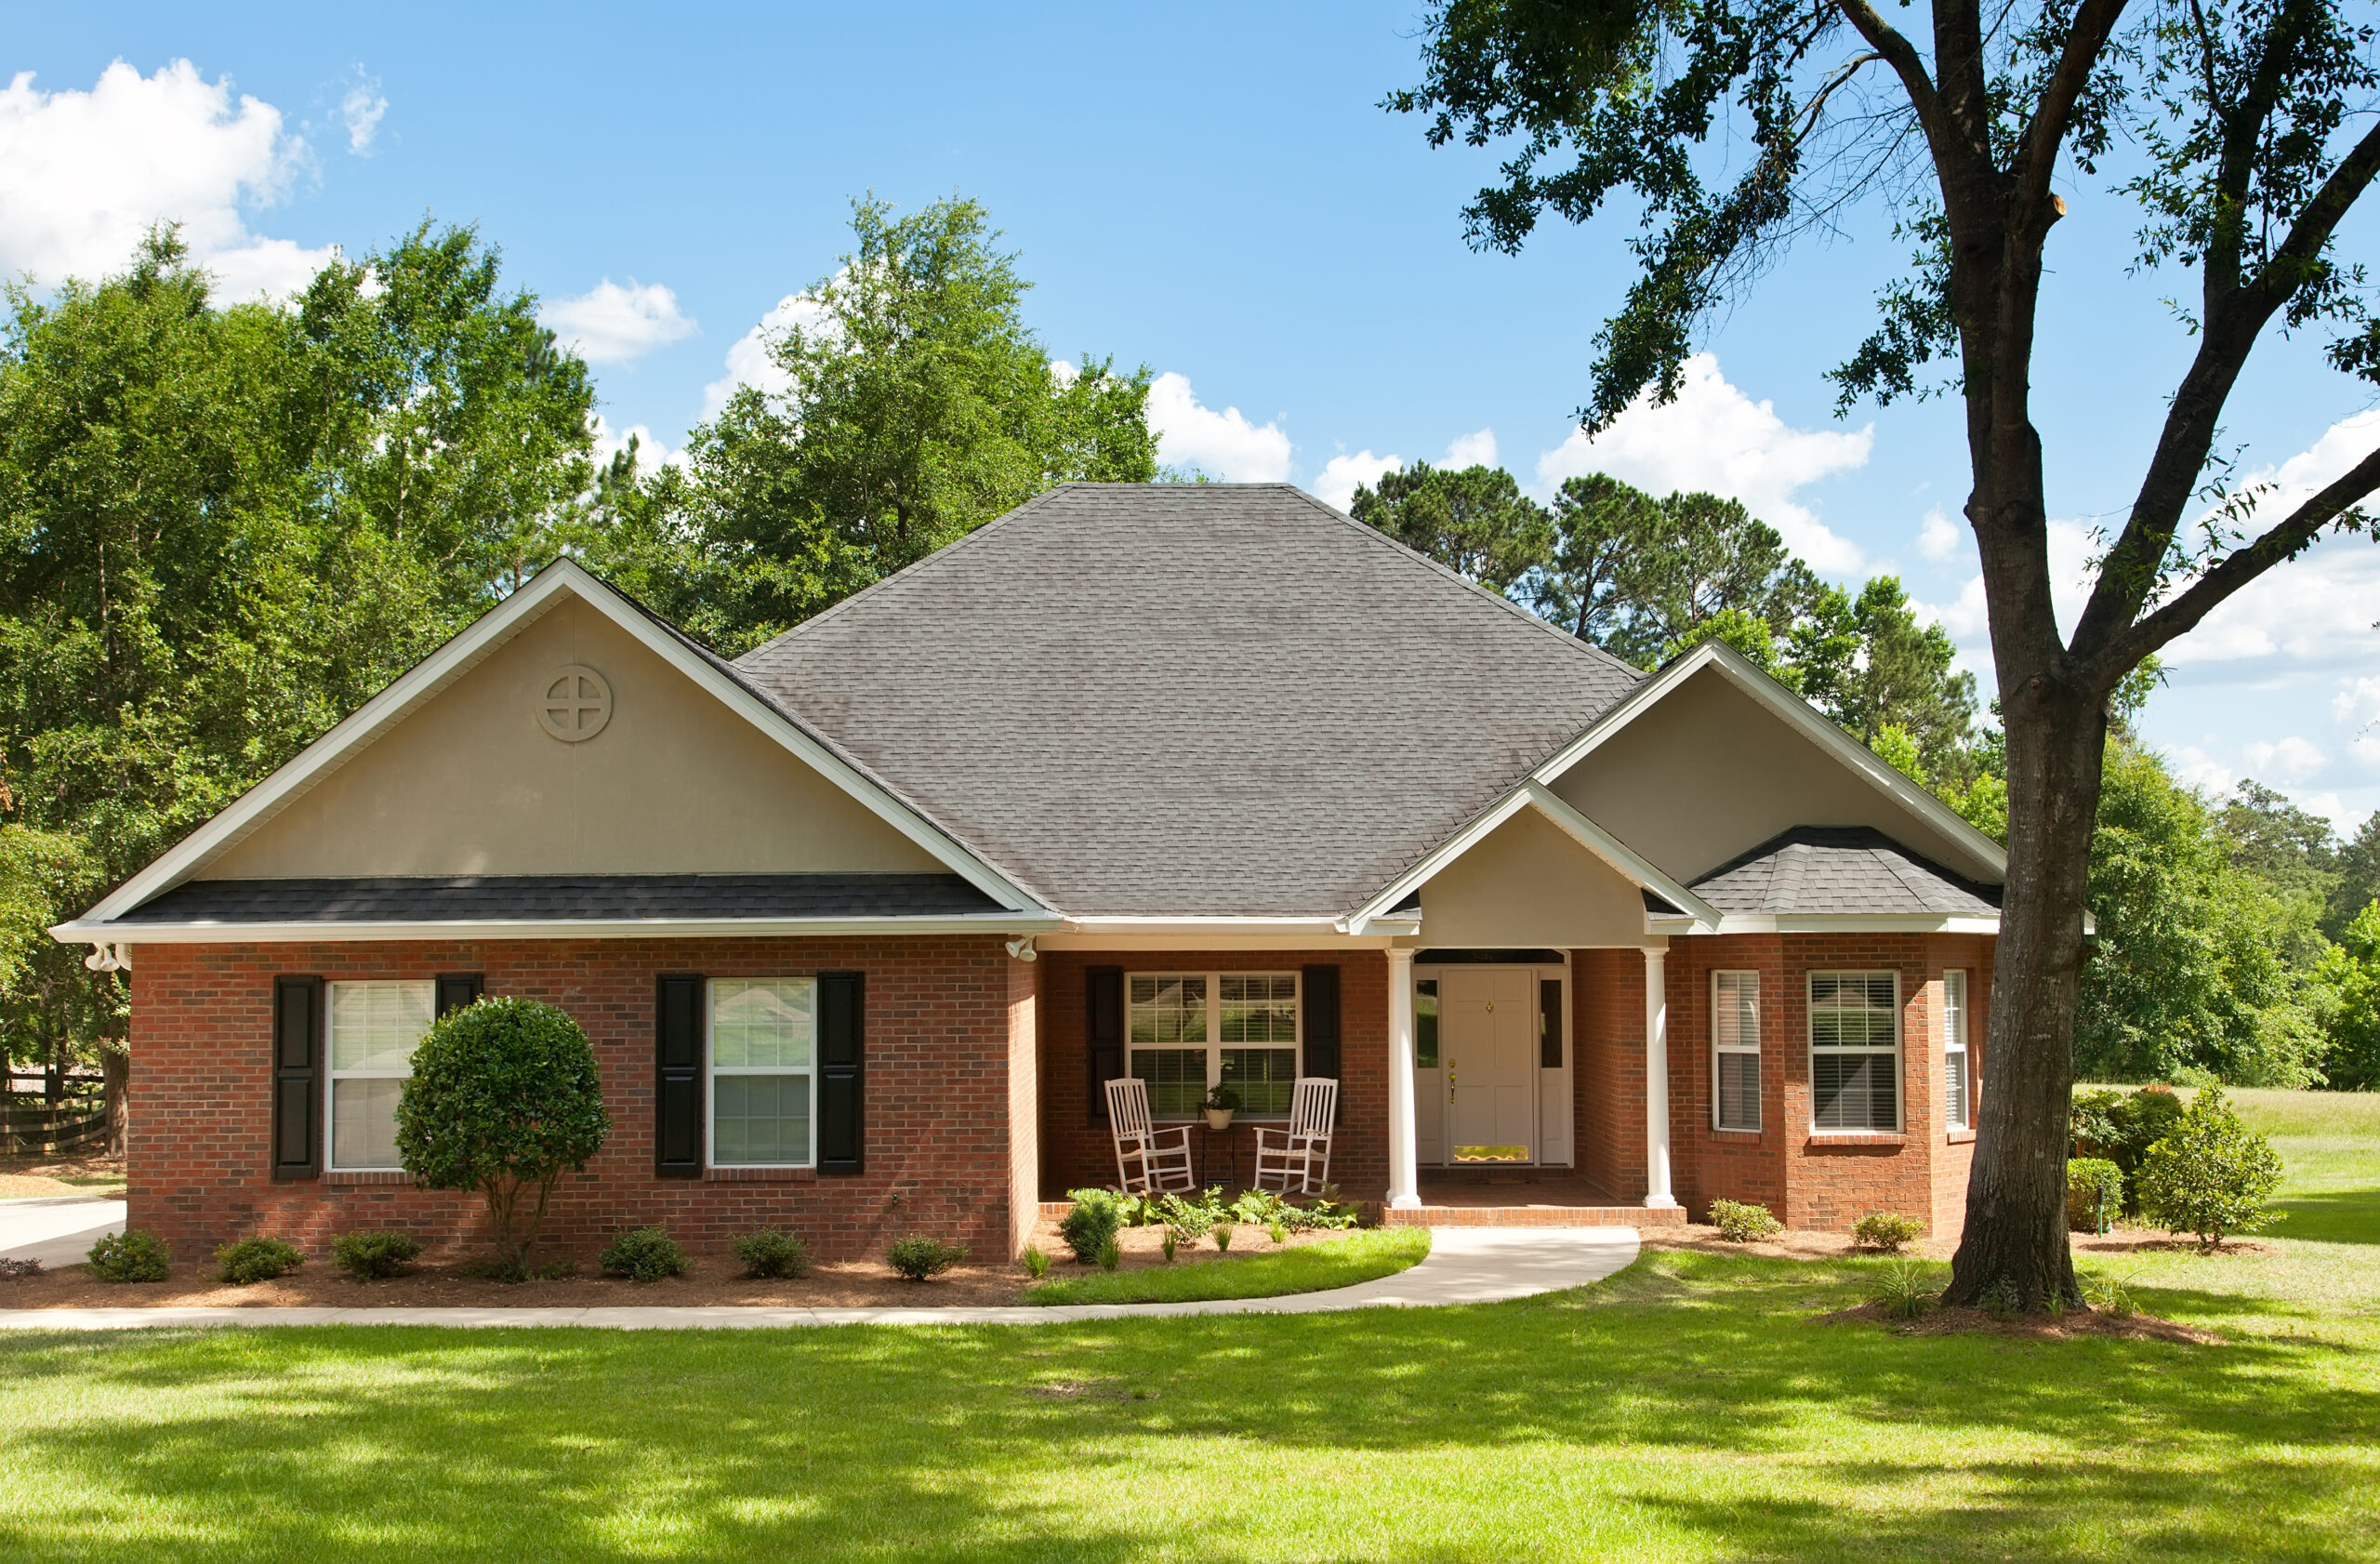 Home inspections by JMI. Louisiana